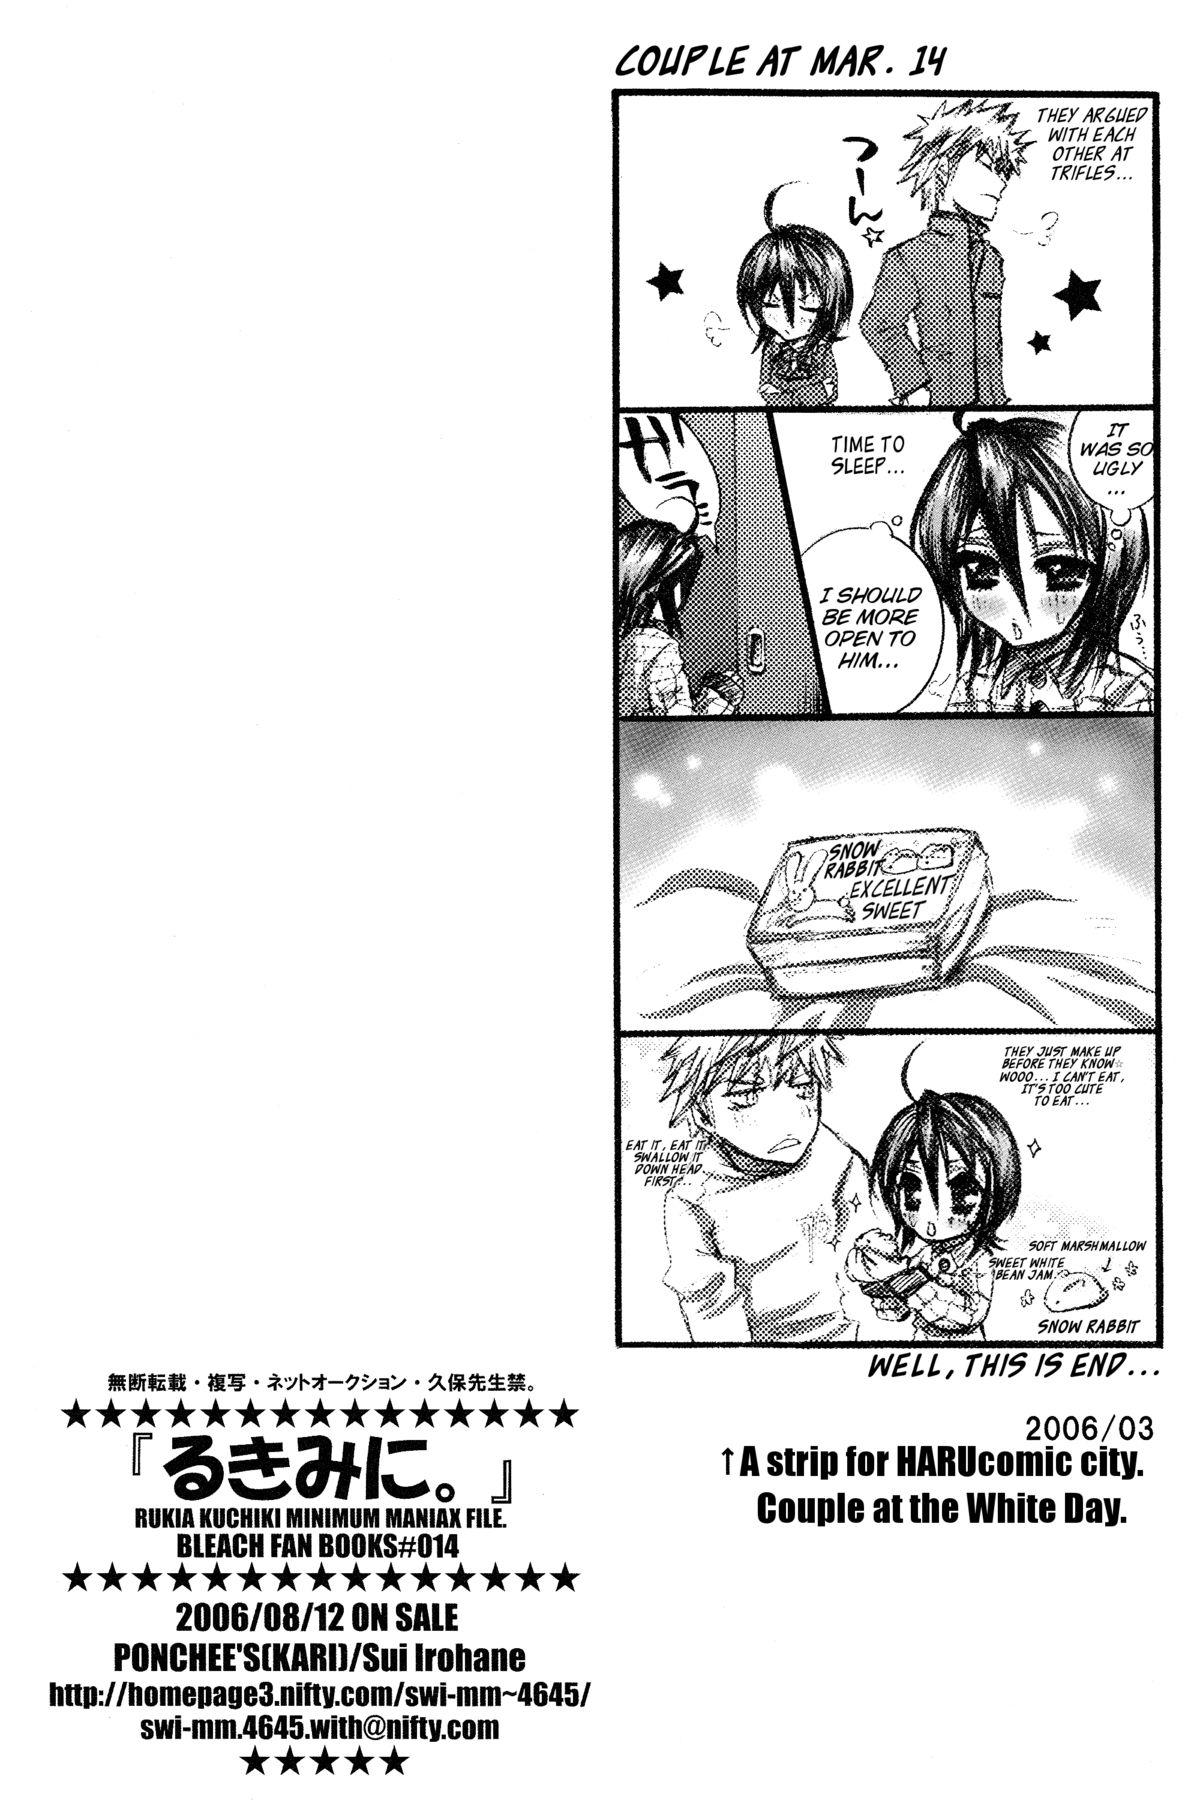 Flash Rukia Kuchiki Minimum Maniax File - Bleach Italiana - Page 54